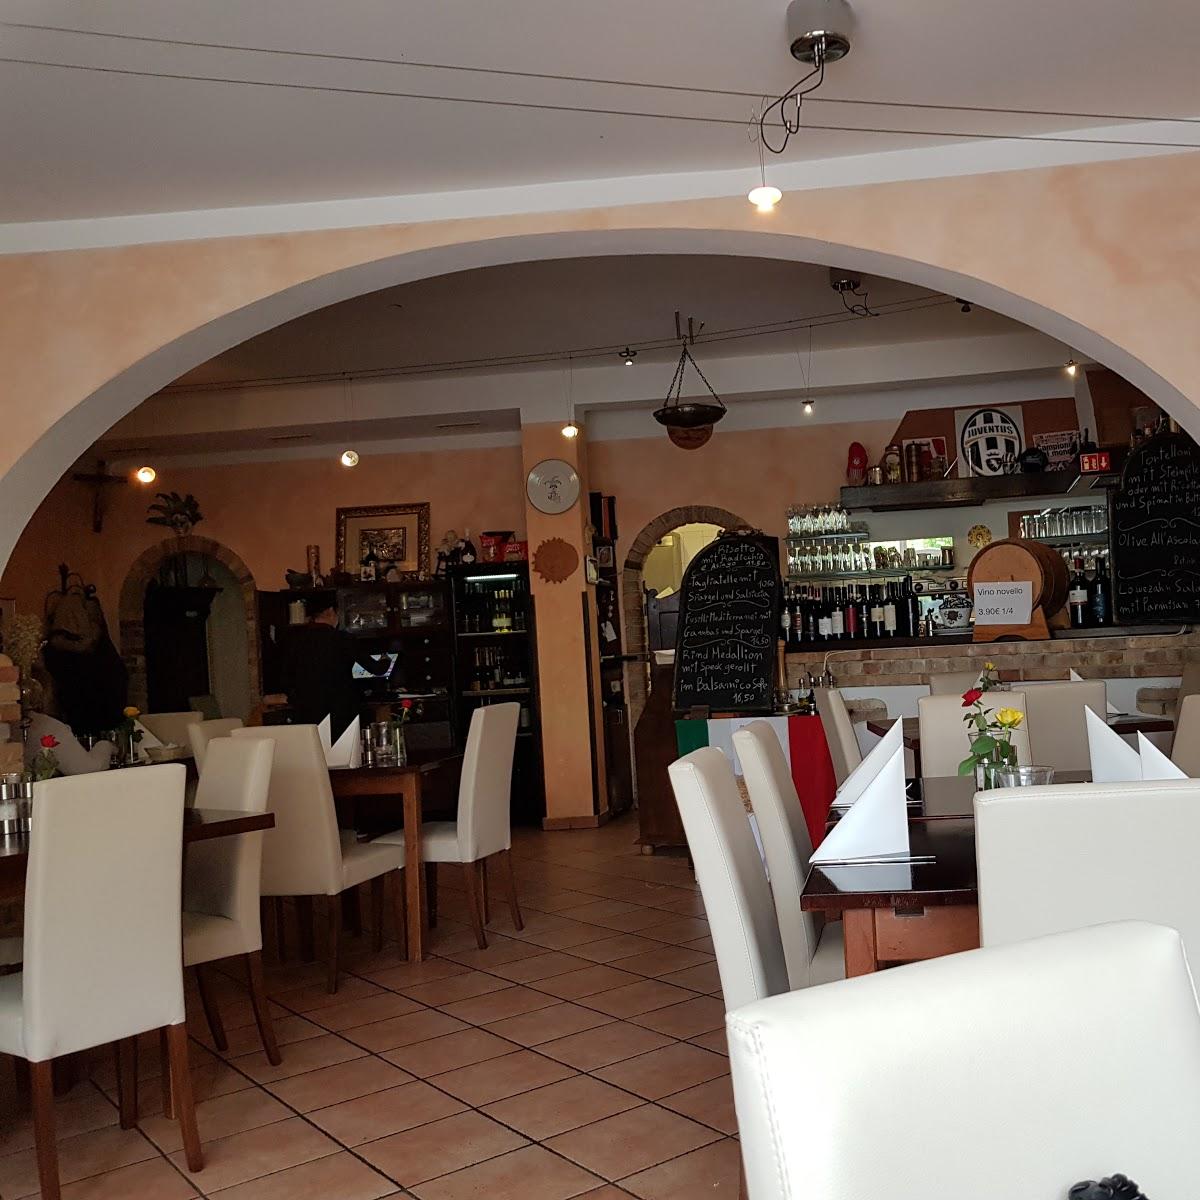 Restaurant "Ristorante Pizzeria Jolly" in Freilassing